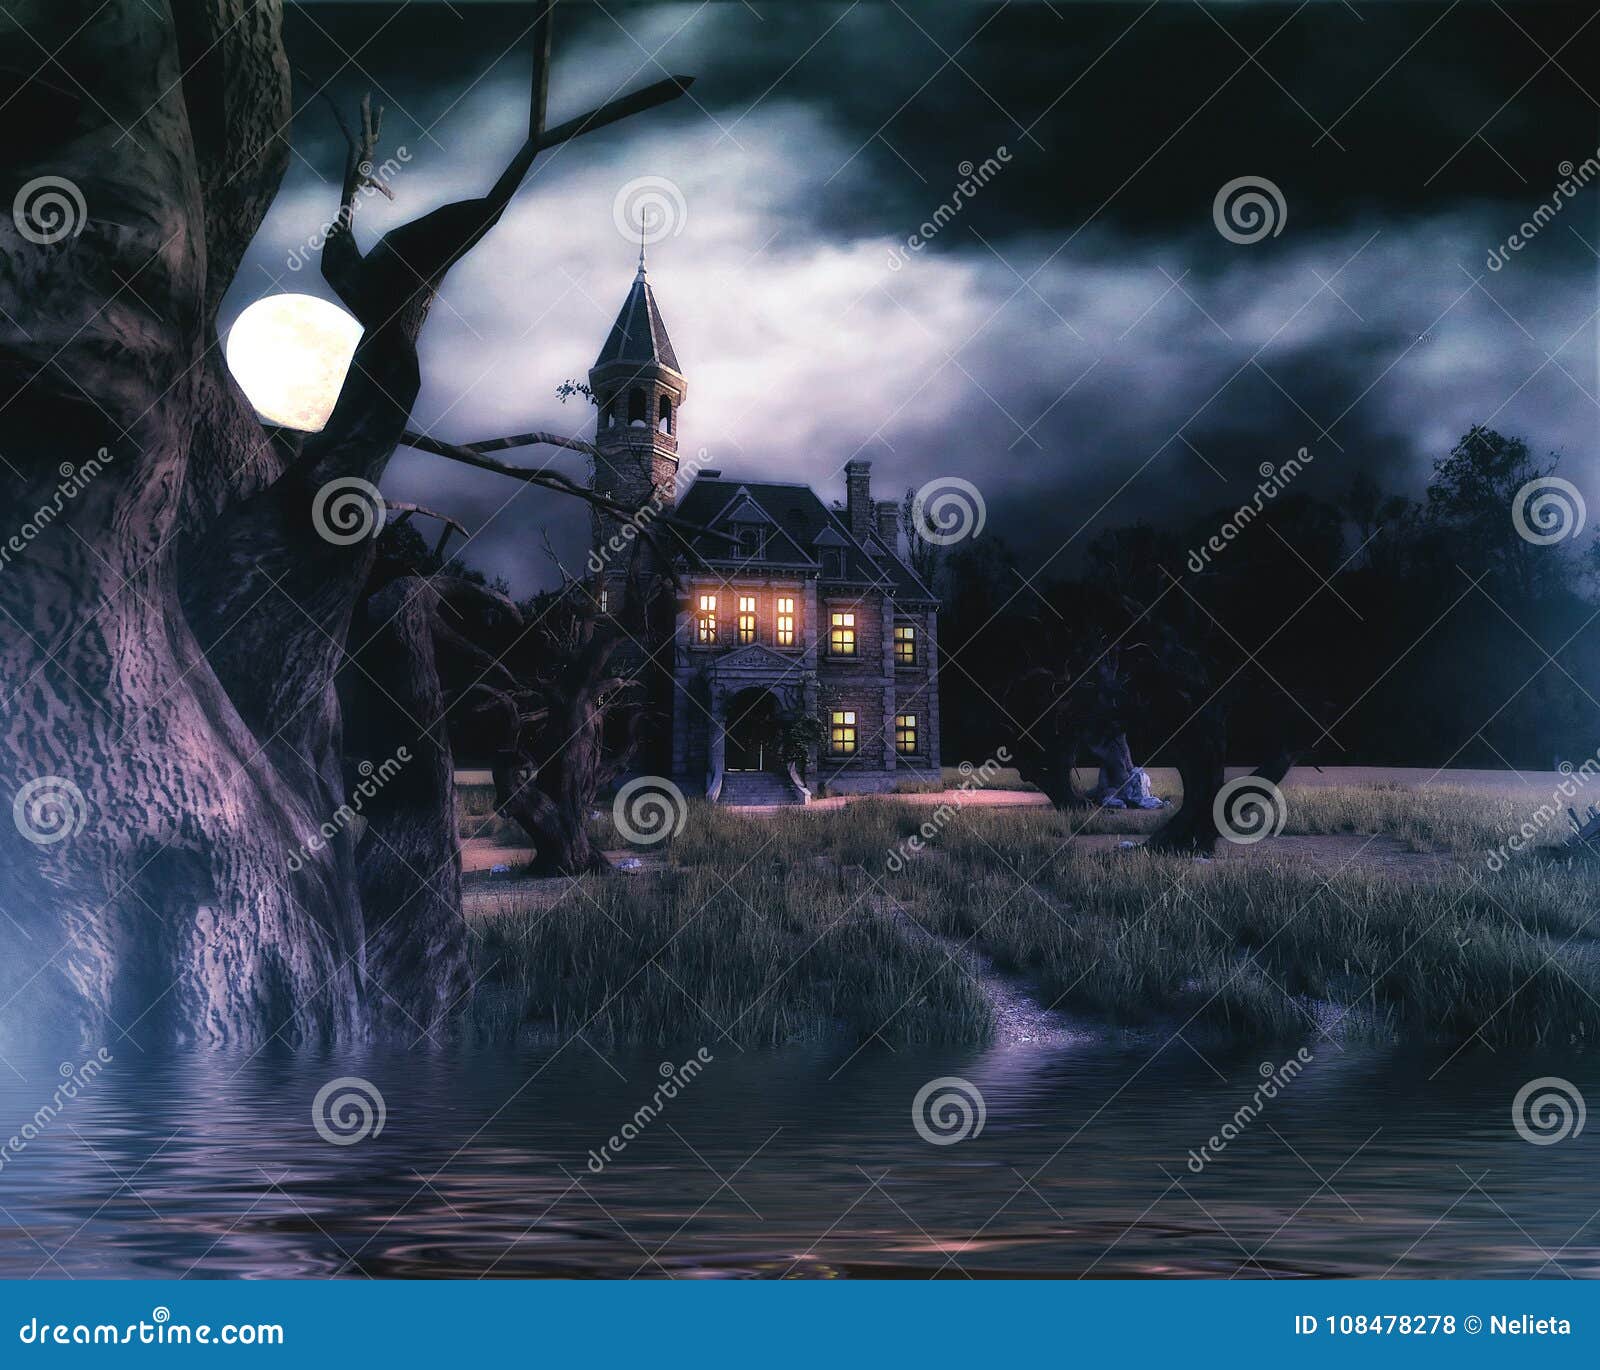 haunted house background with lake